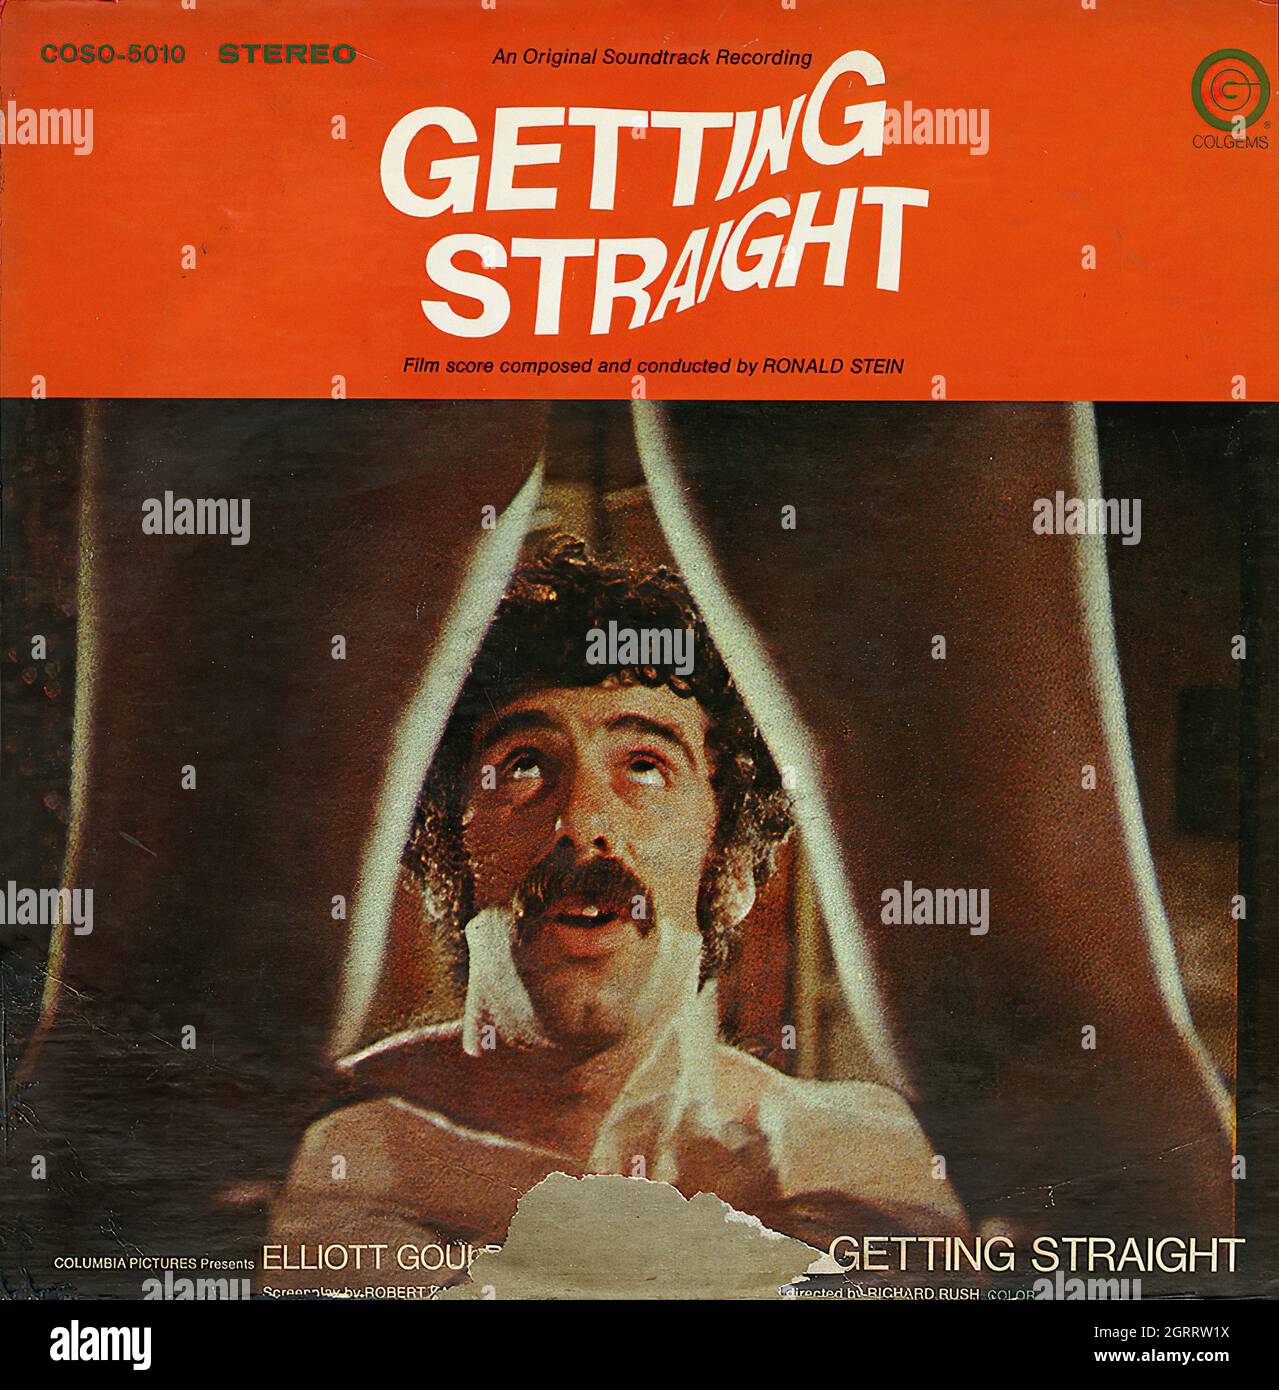 Getting Straight - Vintage Soundtrack Vinyl Album Stock Photo